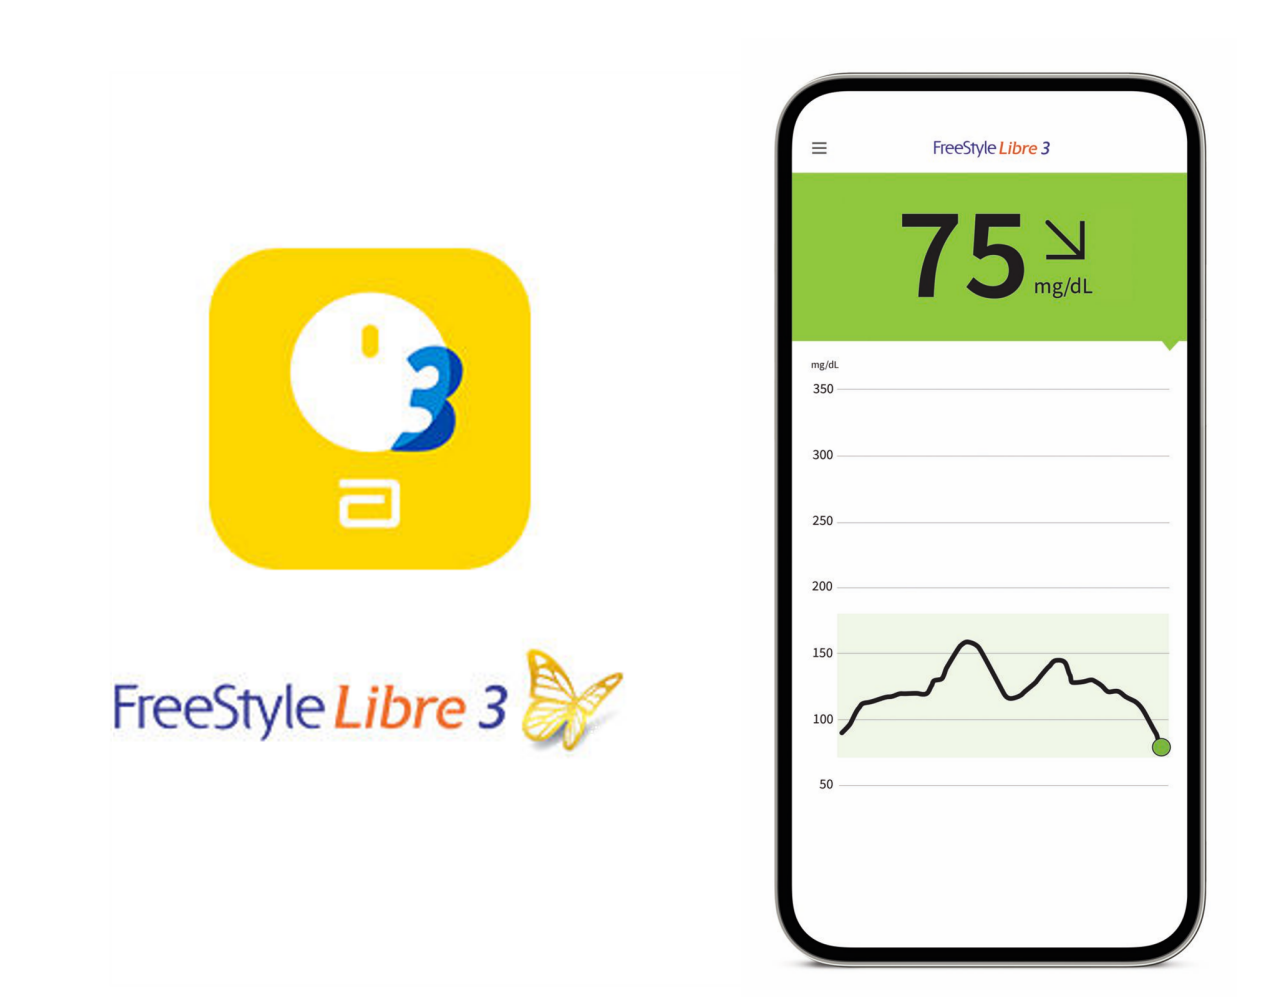 he FreeStyle Libre 3 app and FreeStyle Libre 3 sensor